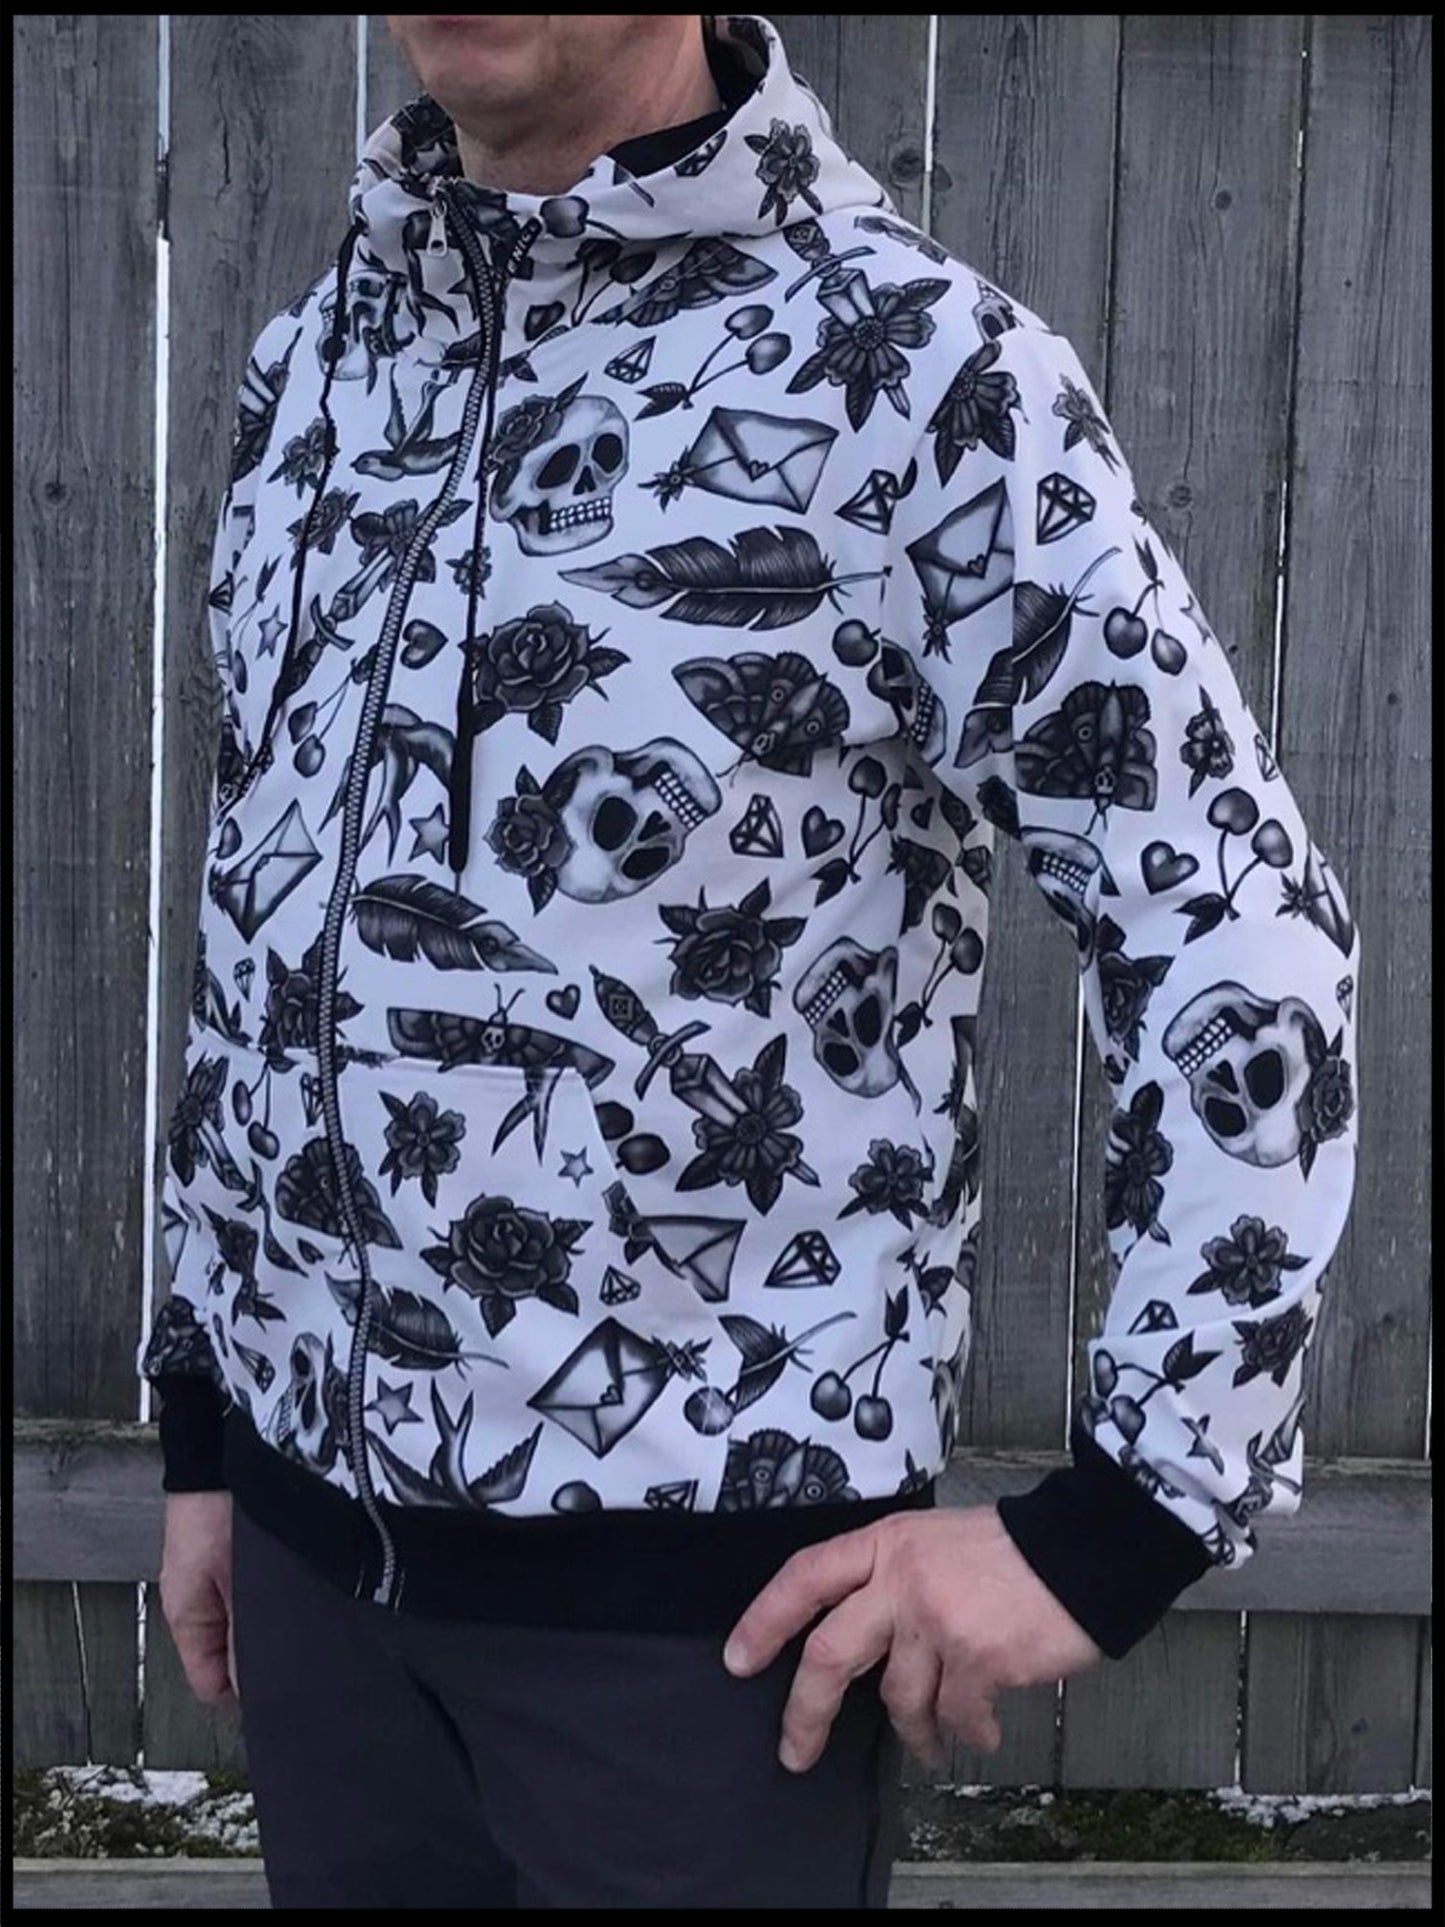 Hiillos - Men's sweatshirt/hoodie - Paper pattern